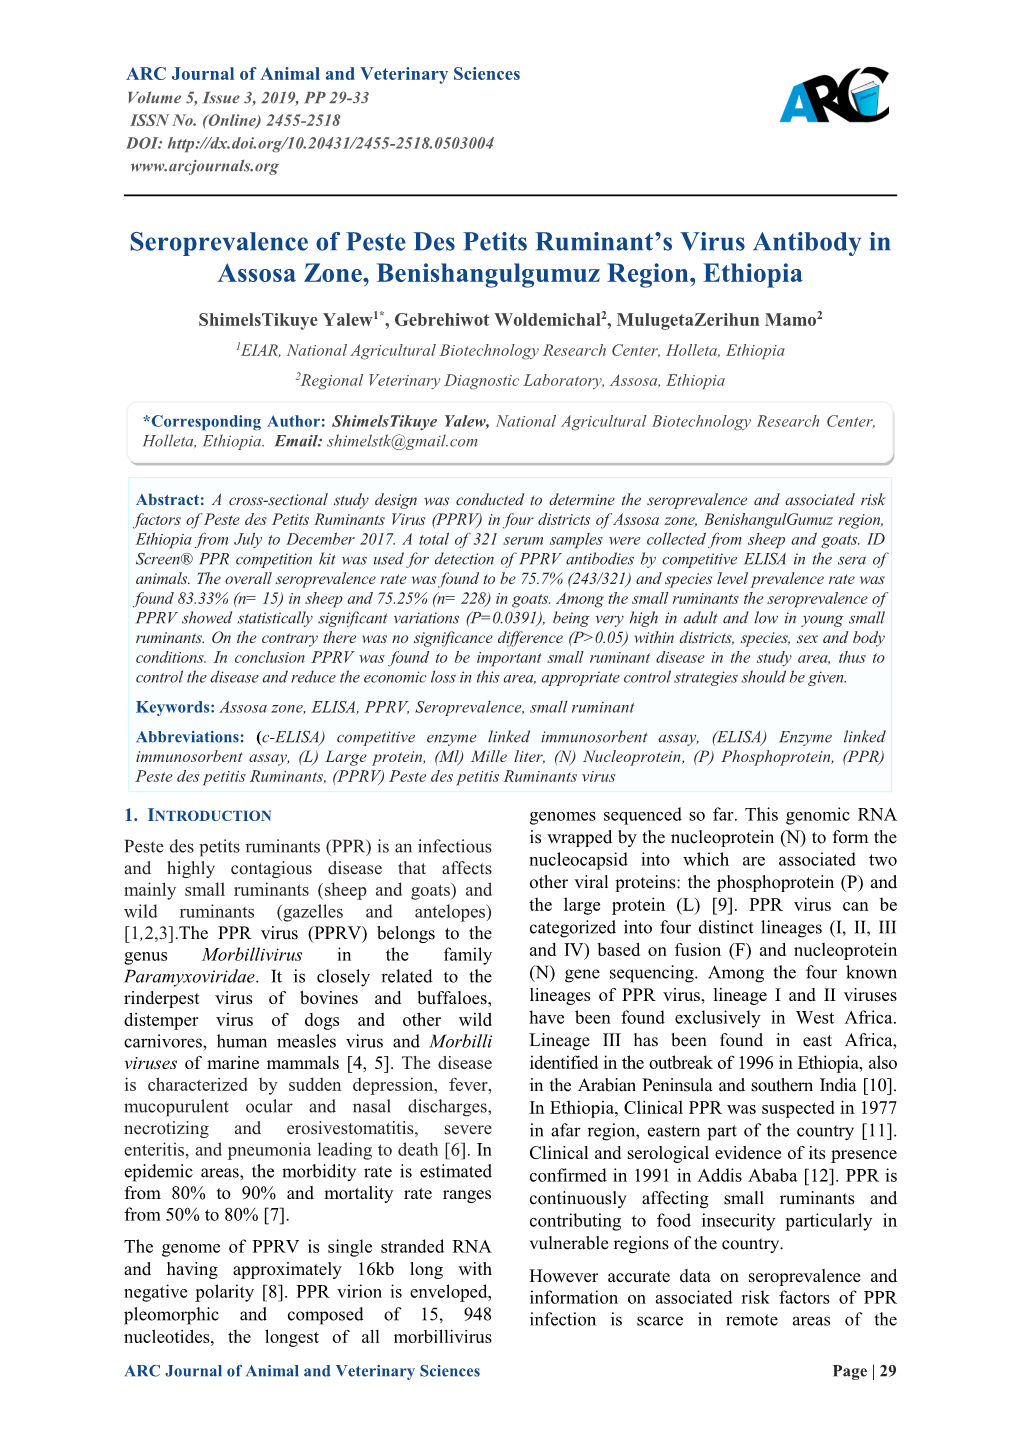 Seroprevalence of Peste Des Petits Ruminant's Virus Antibody In